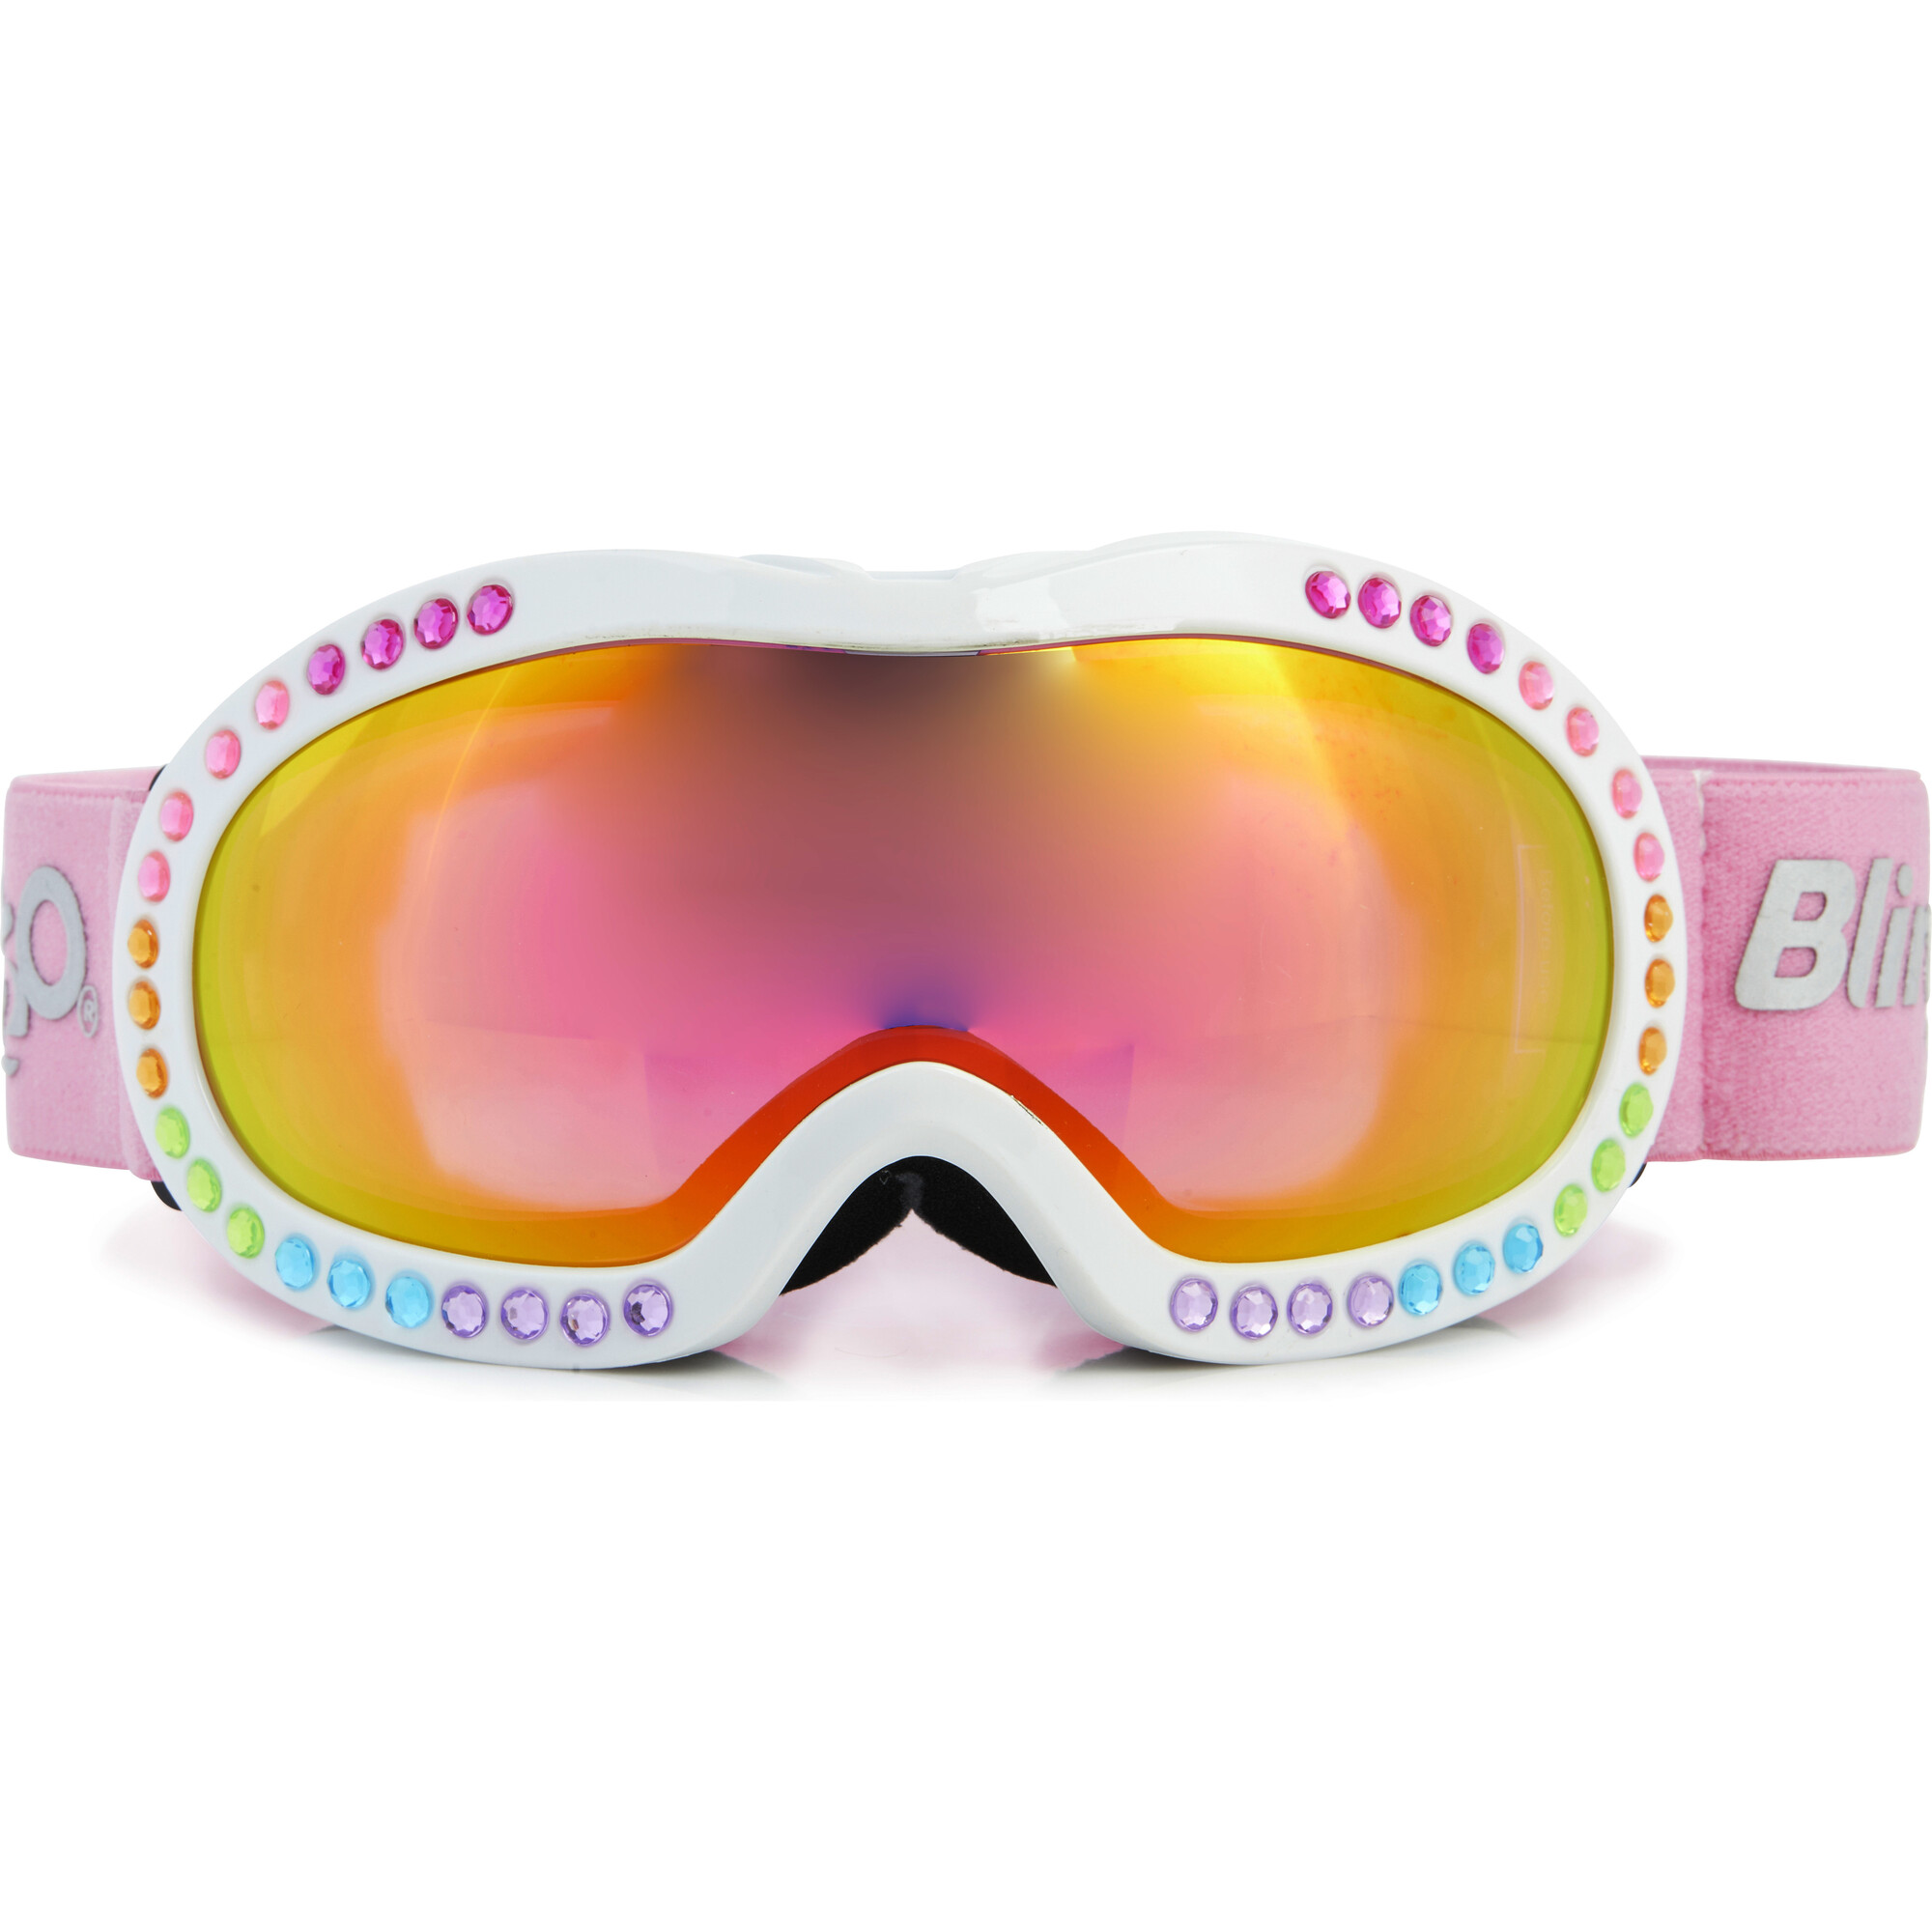 Bling2o Kids Stones of Rainbow Ski Goggles